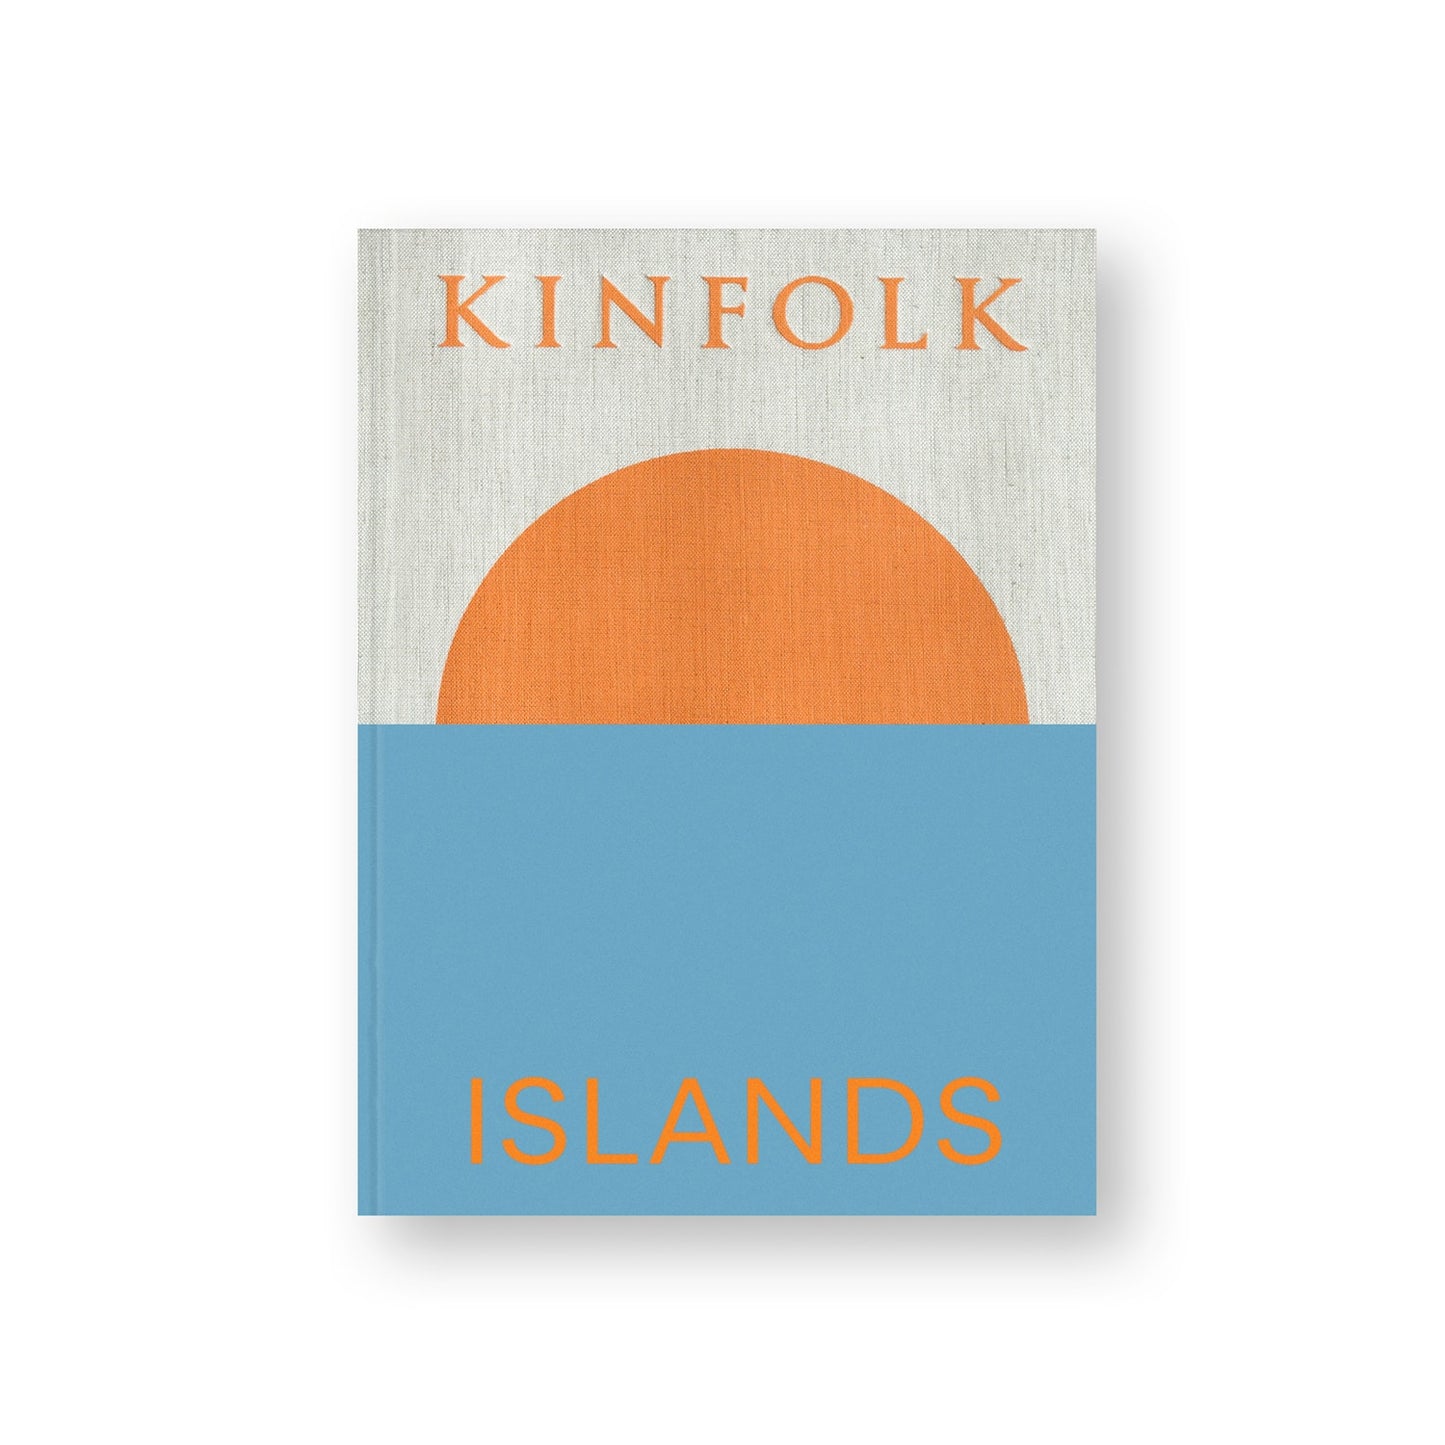 Kinfolk Islands: Kinfolk Adventures